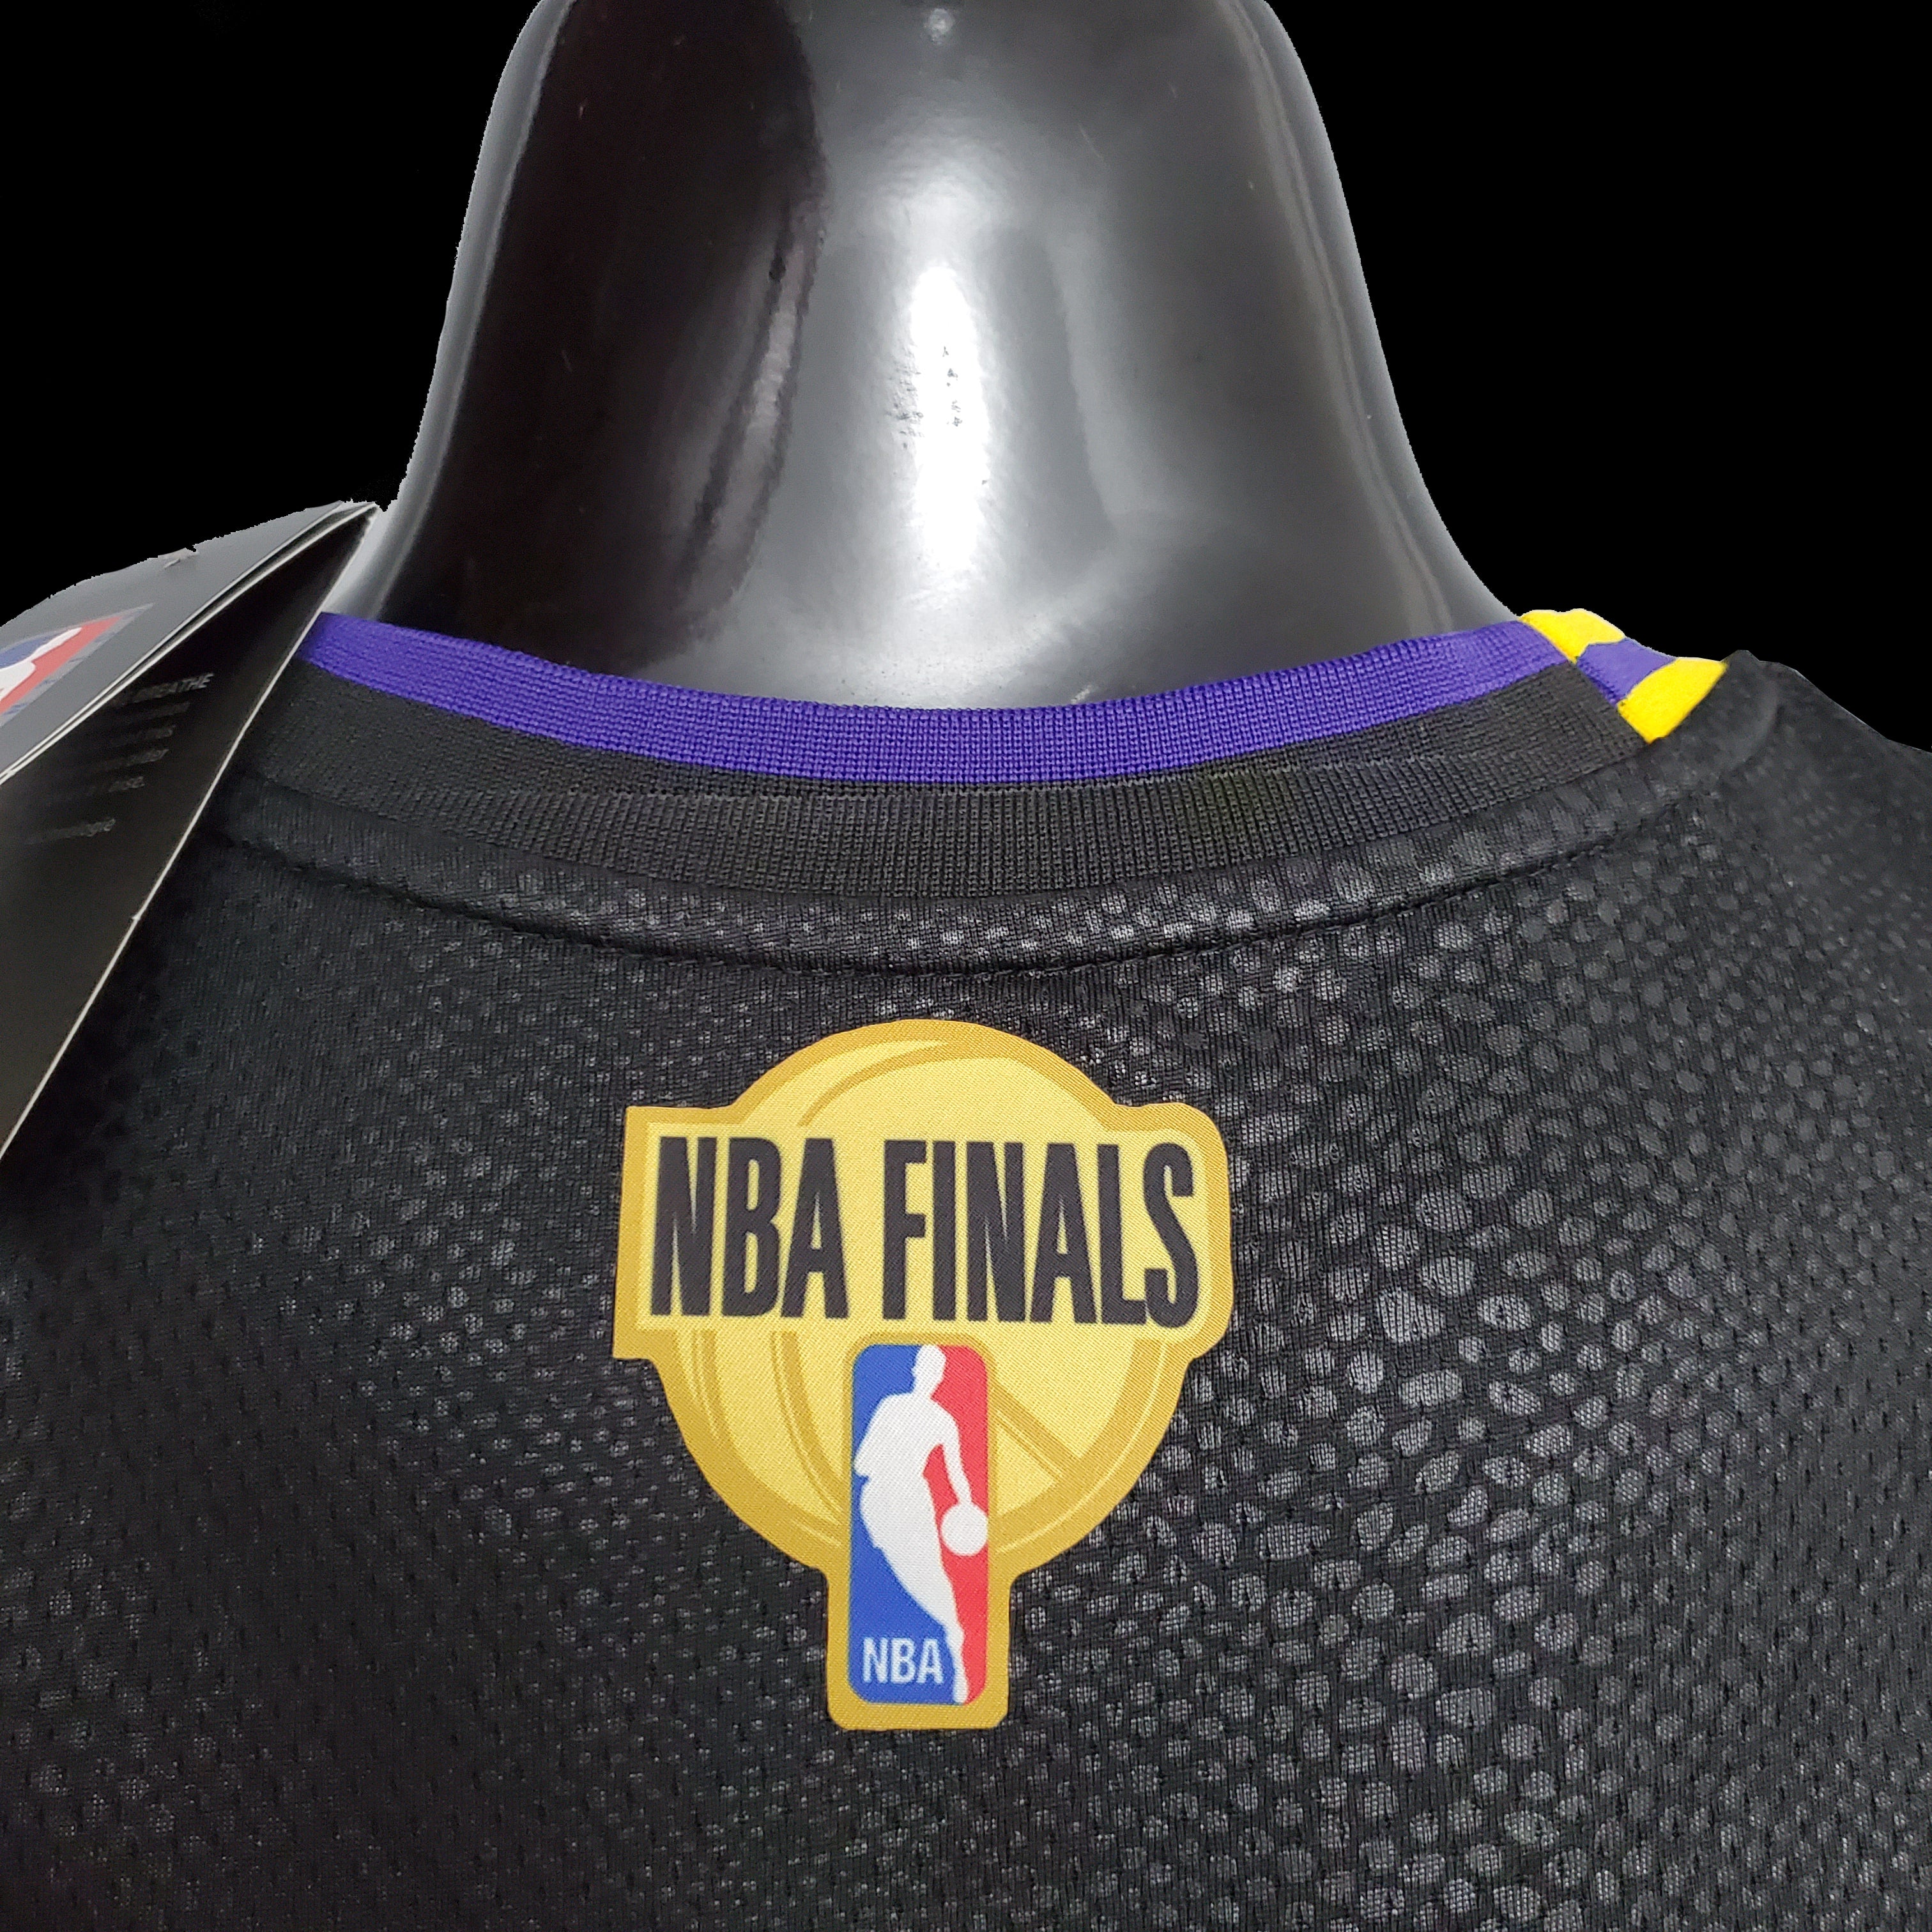 Los Angeles Kobe Bryant 8 Lakers Black NBA Jersey